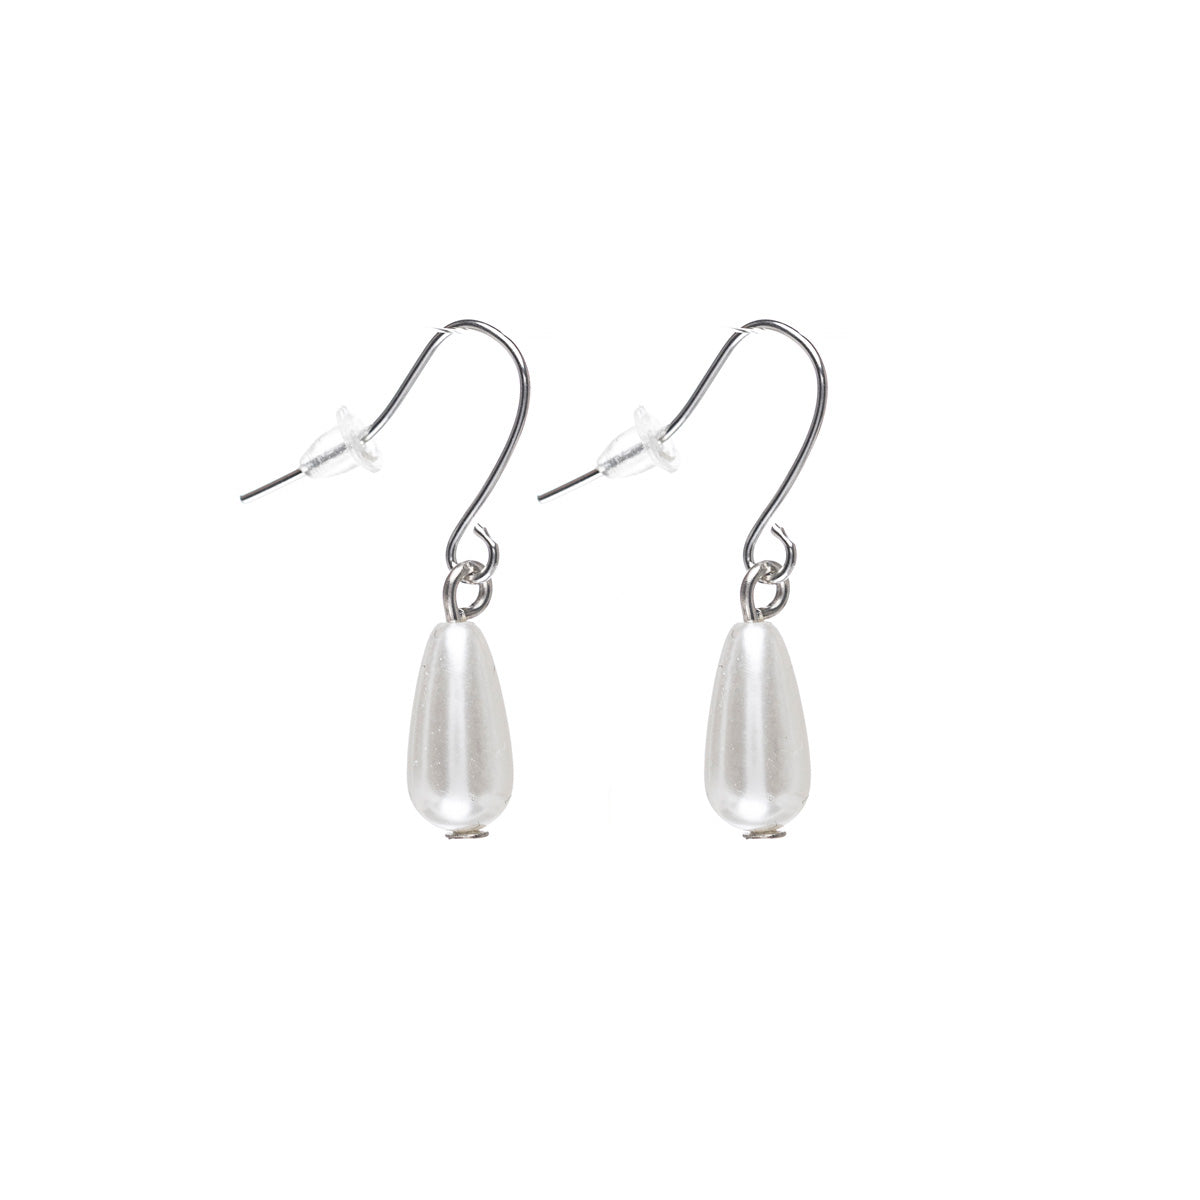 Pearl earrings drop